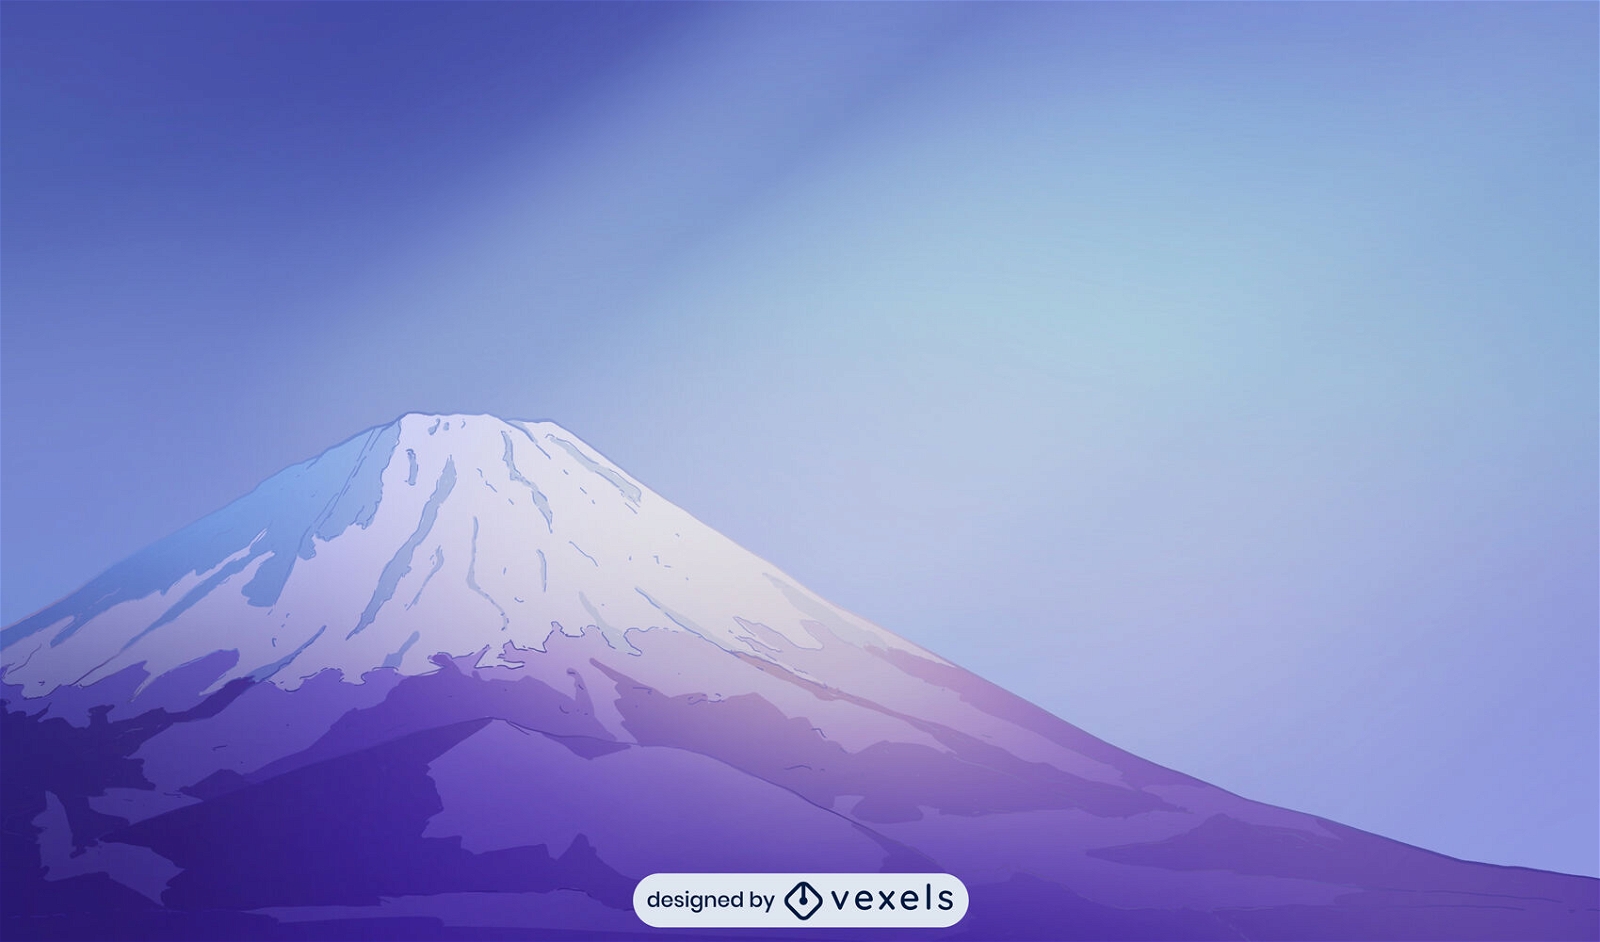 Dise?o de ilustraci?n de fondo del monte Fuji